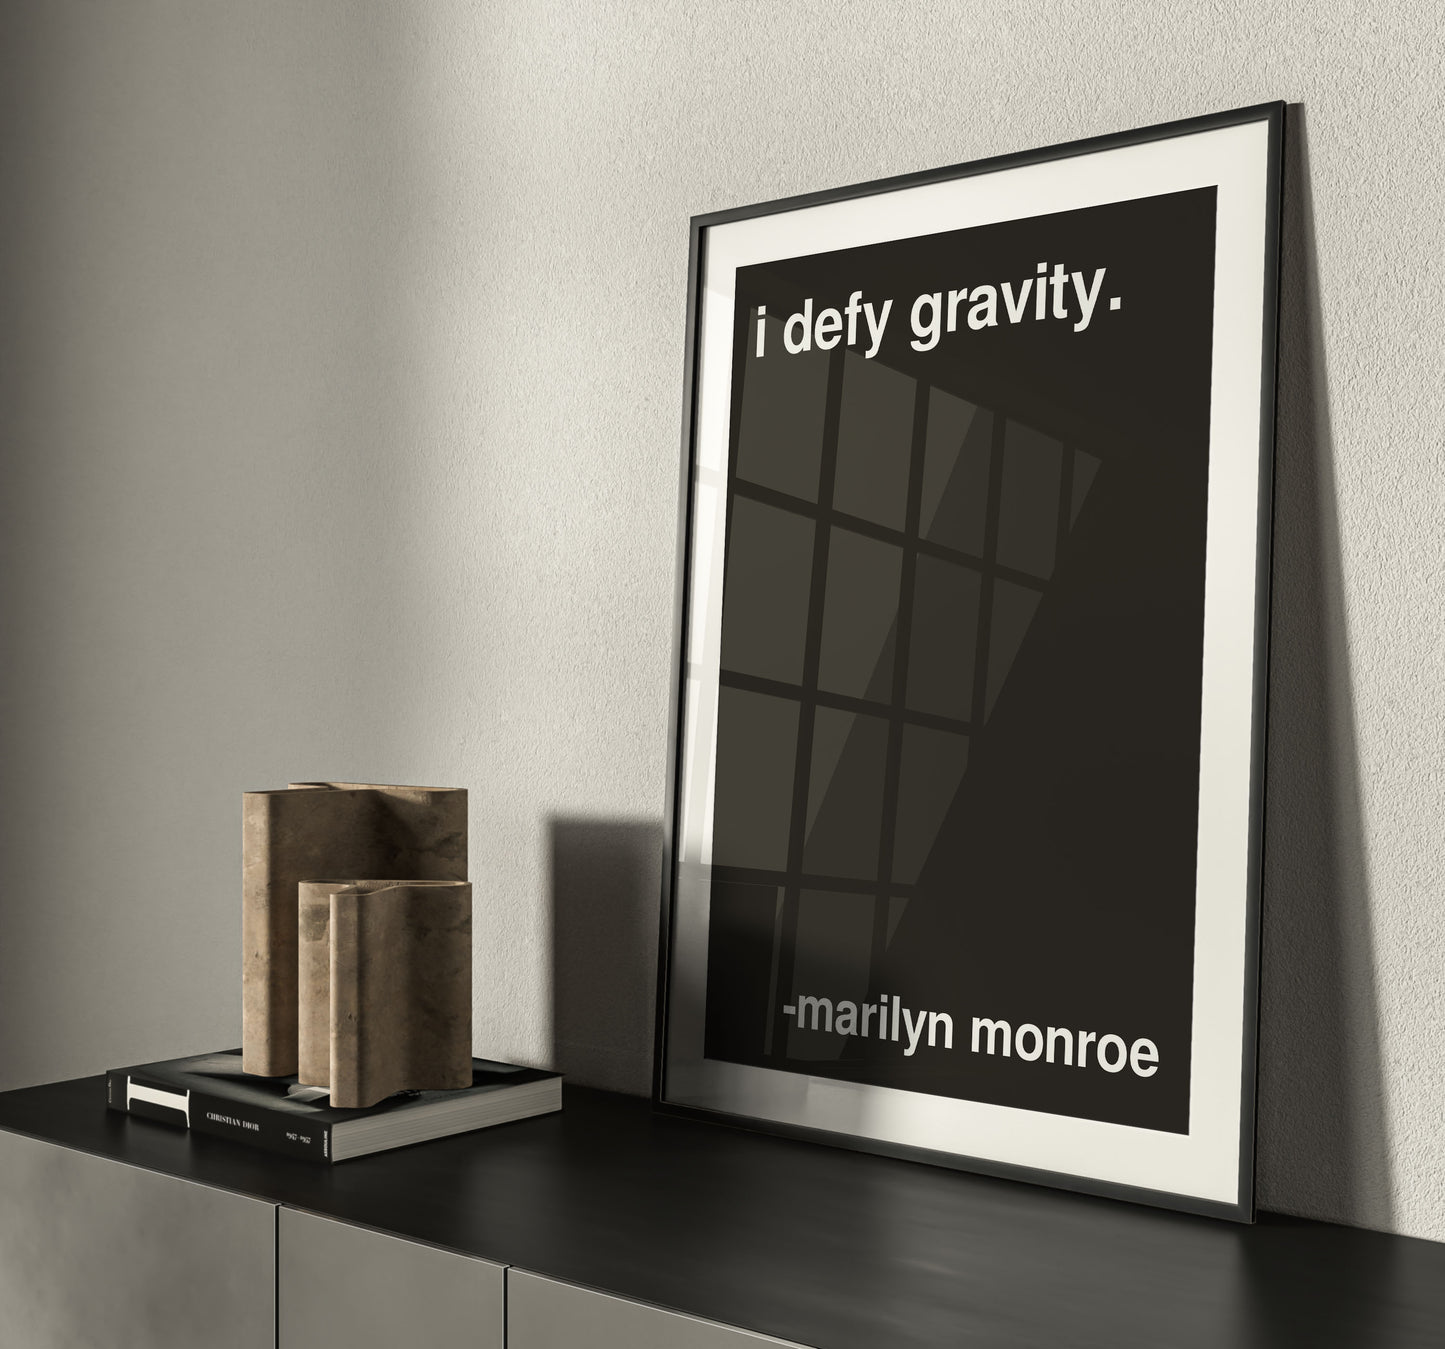 I Defy Gravity Marilyn Monroe Statement Black Print